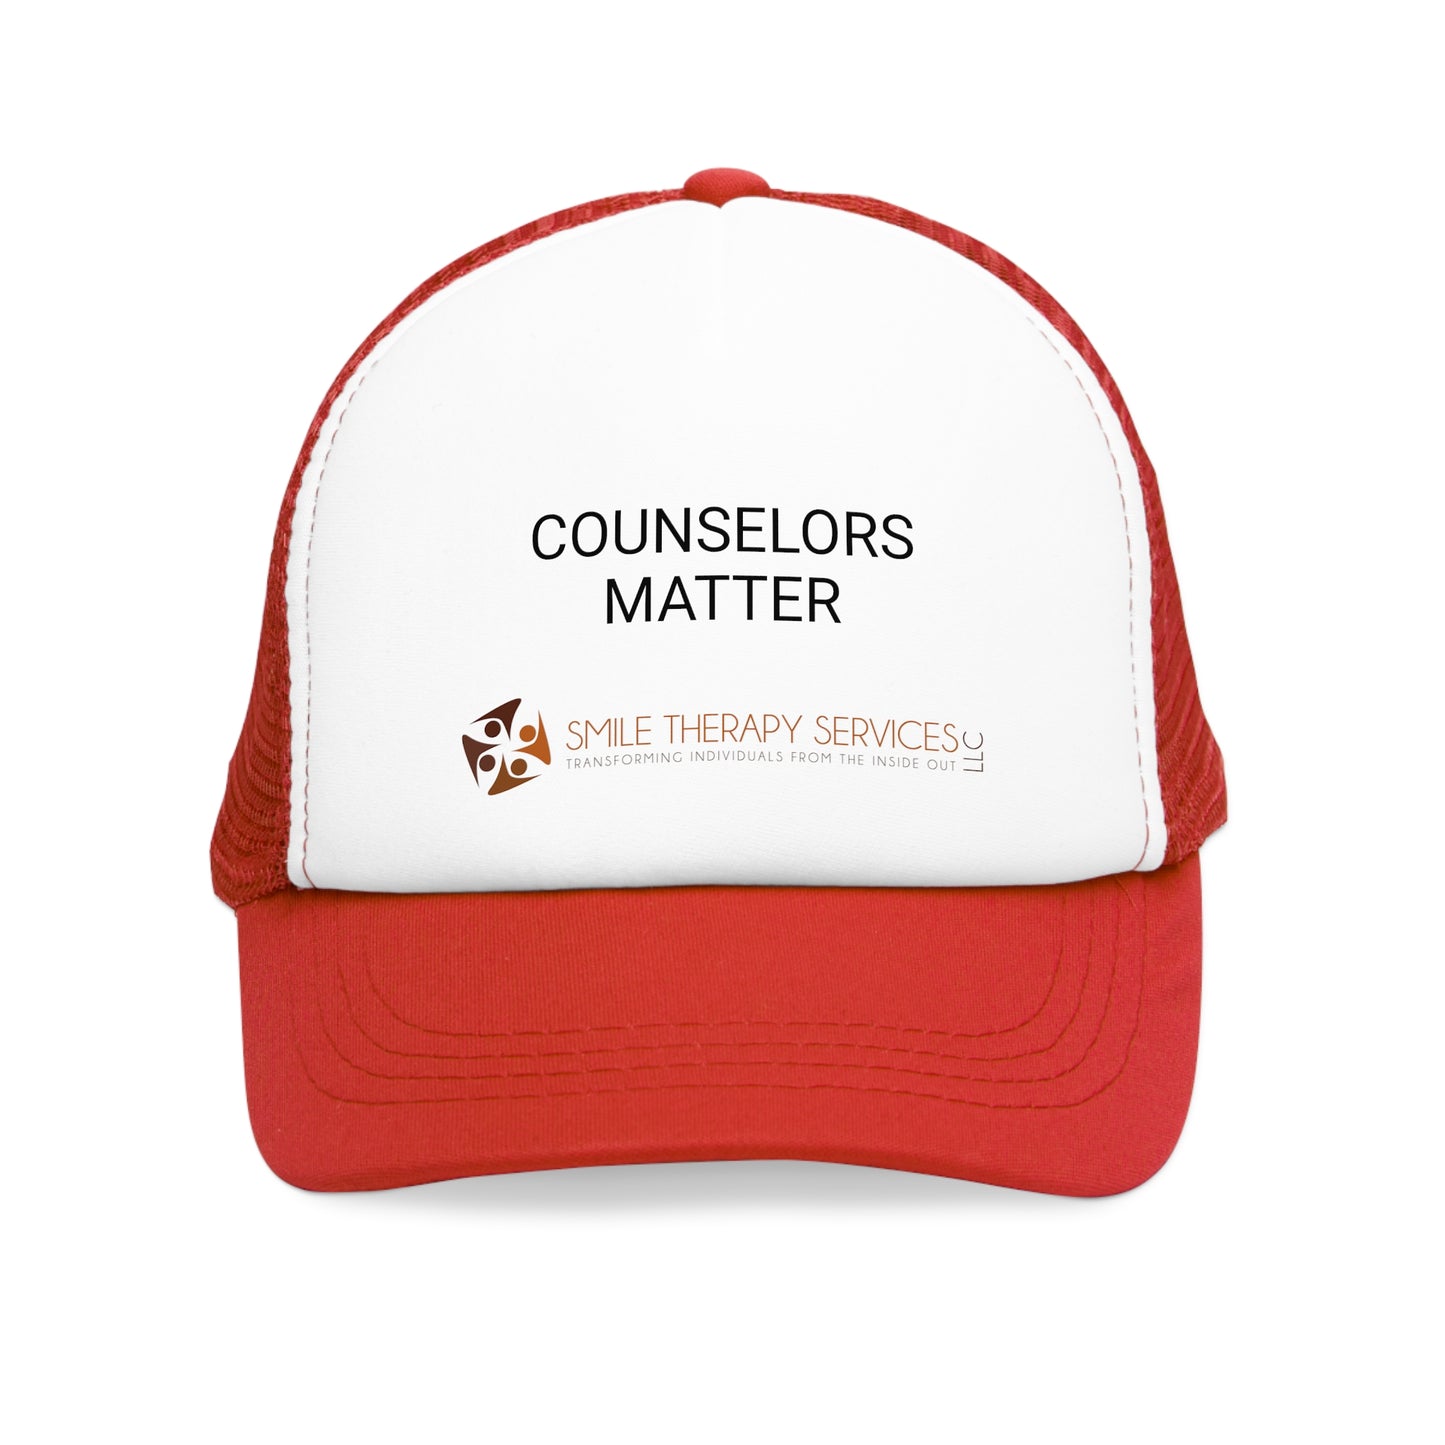 Counselors  Matter Mesh Cap